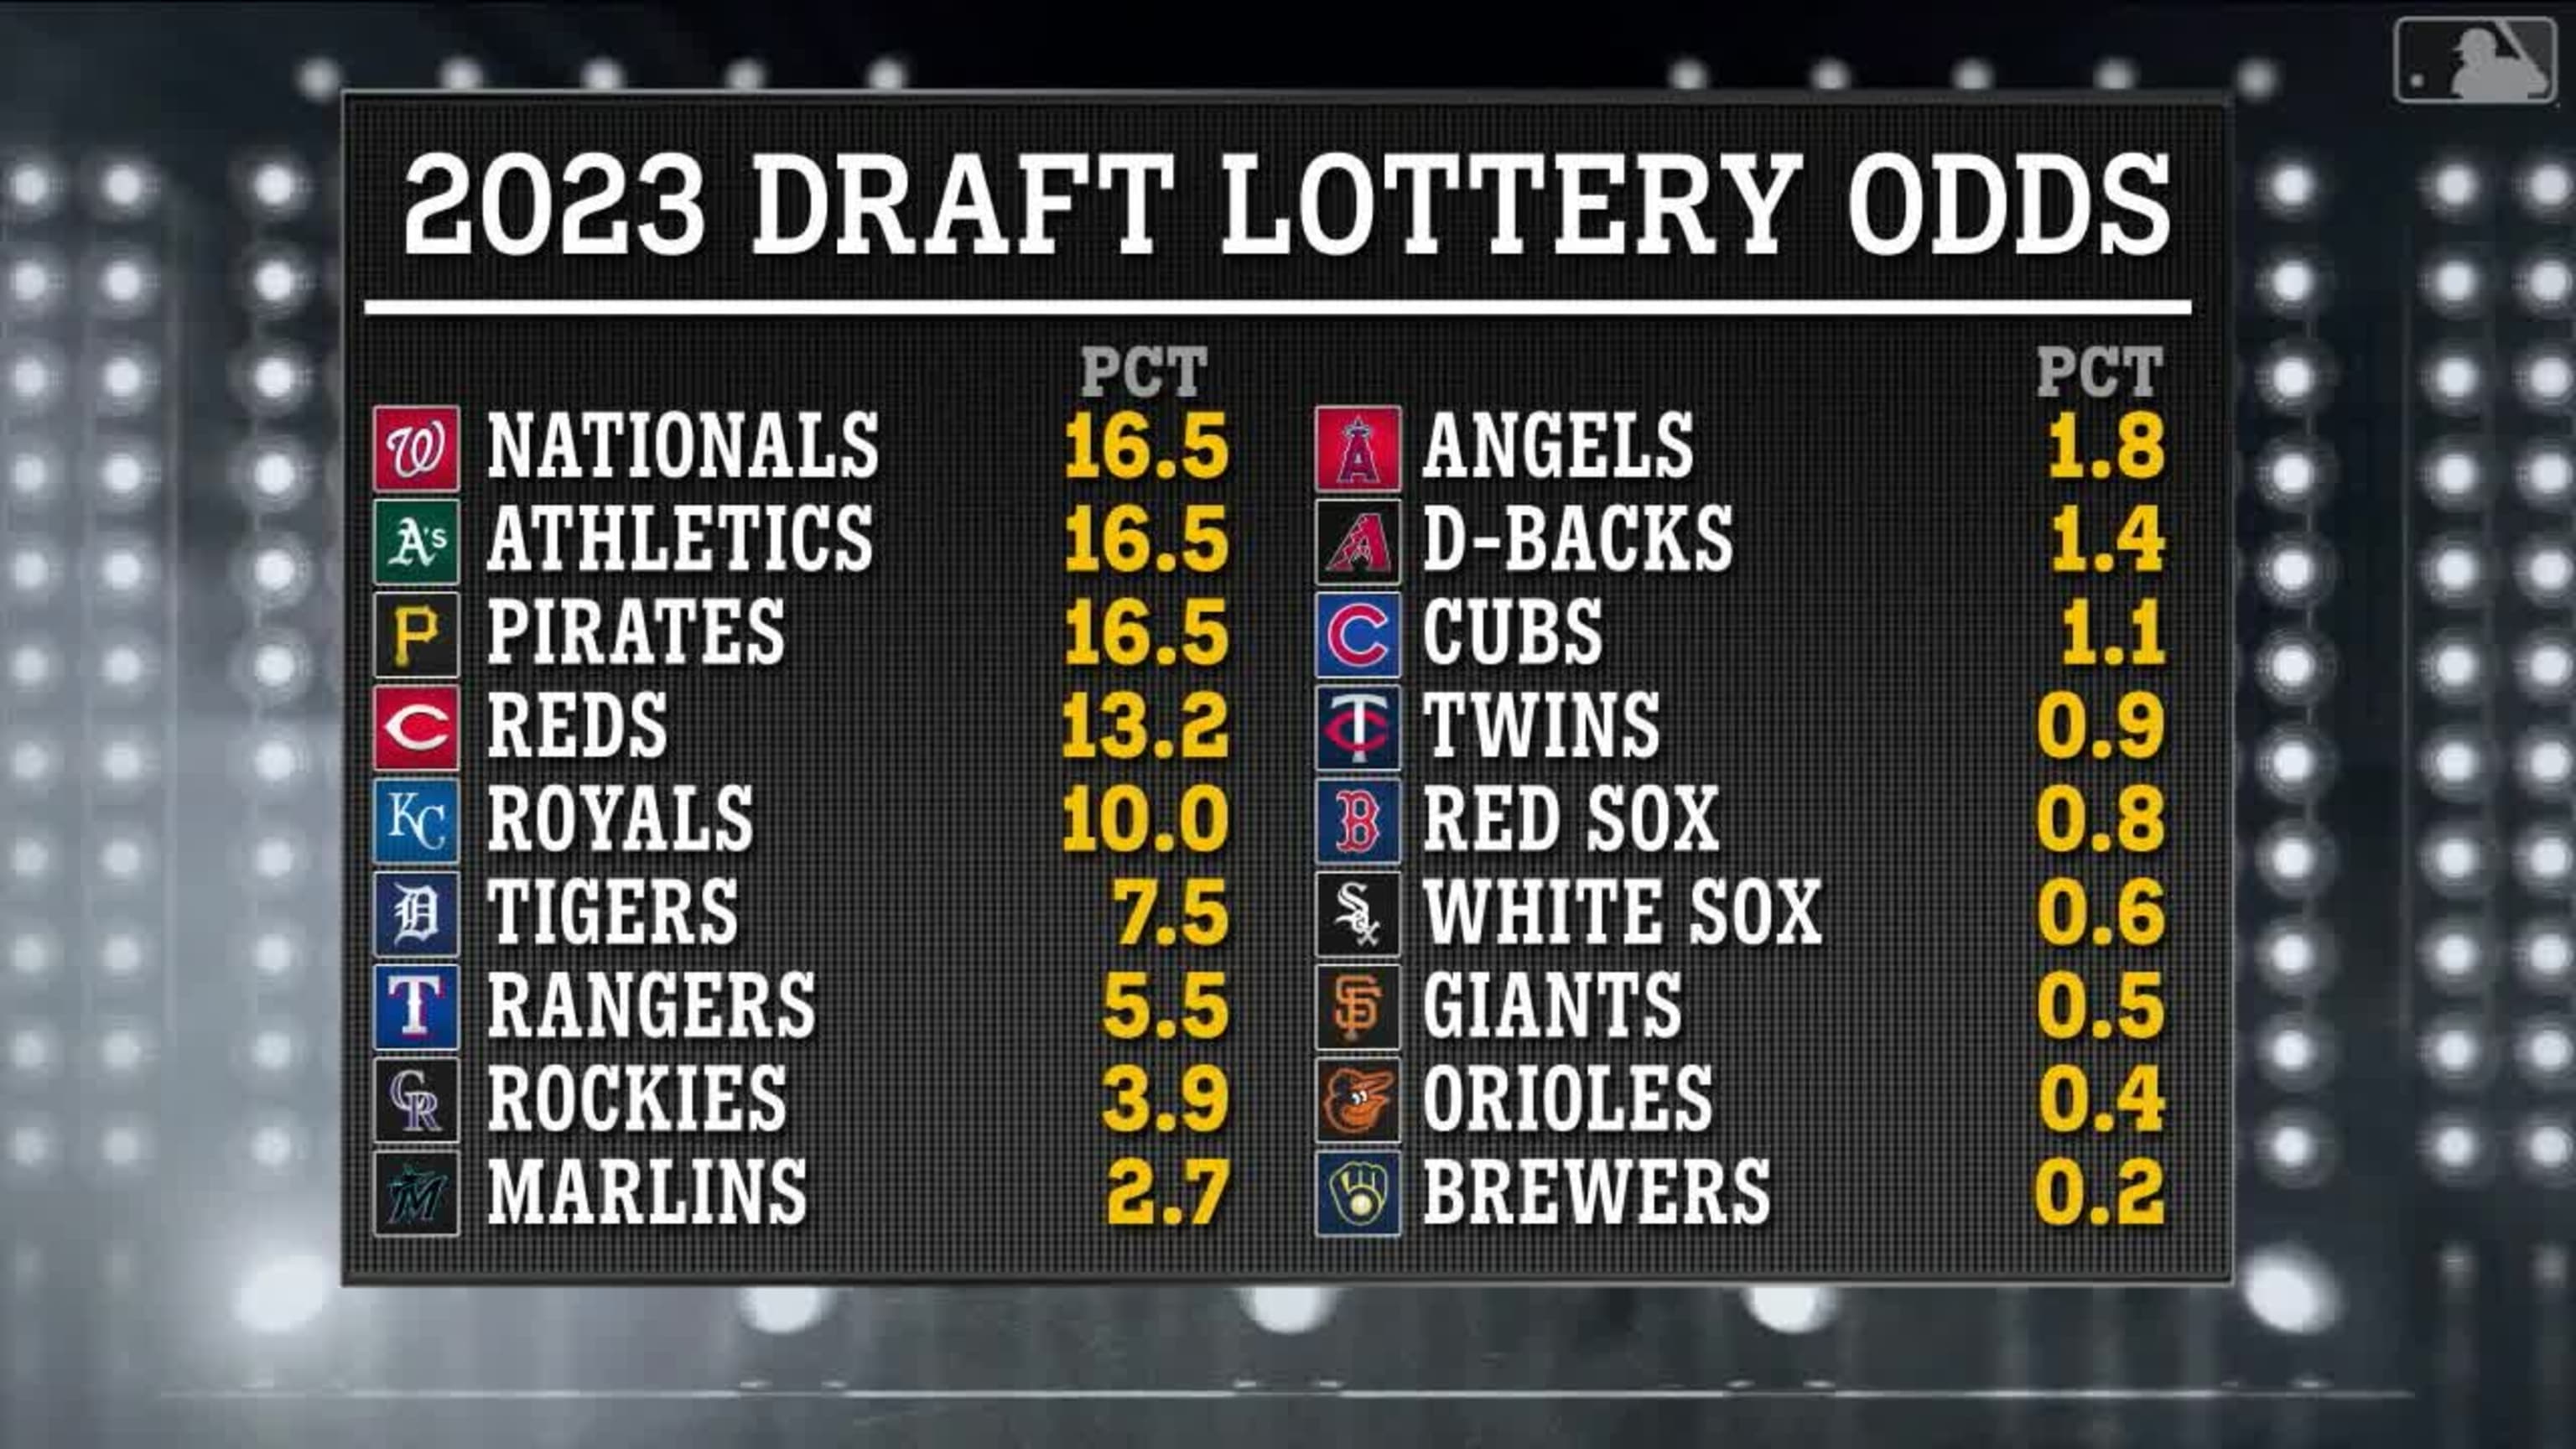 MLB Draft 2023: Here's the full list of the Red Sox' 2023 picks